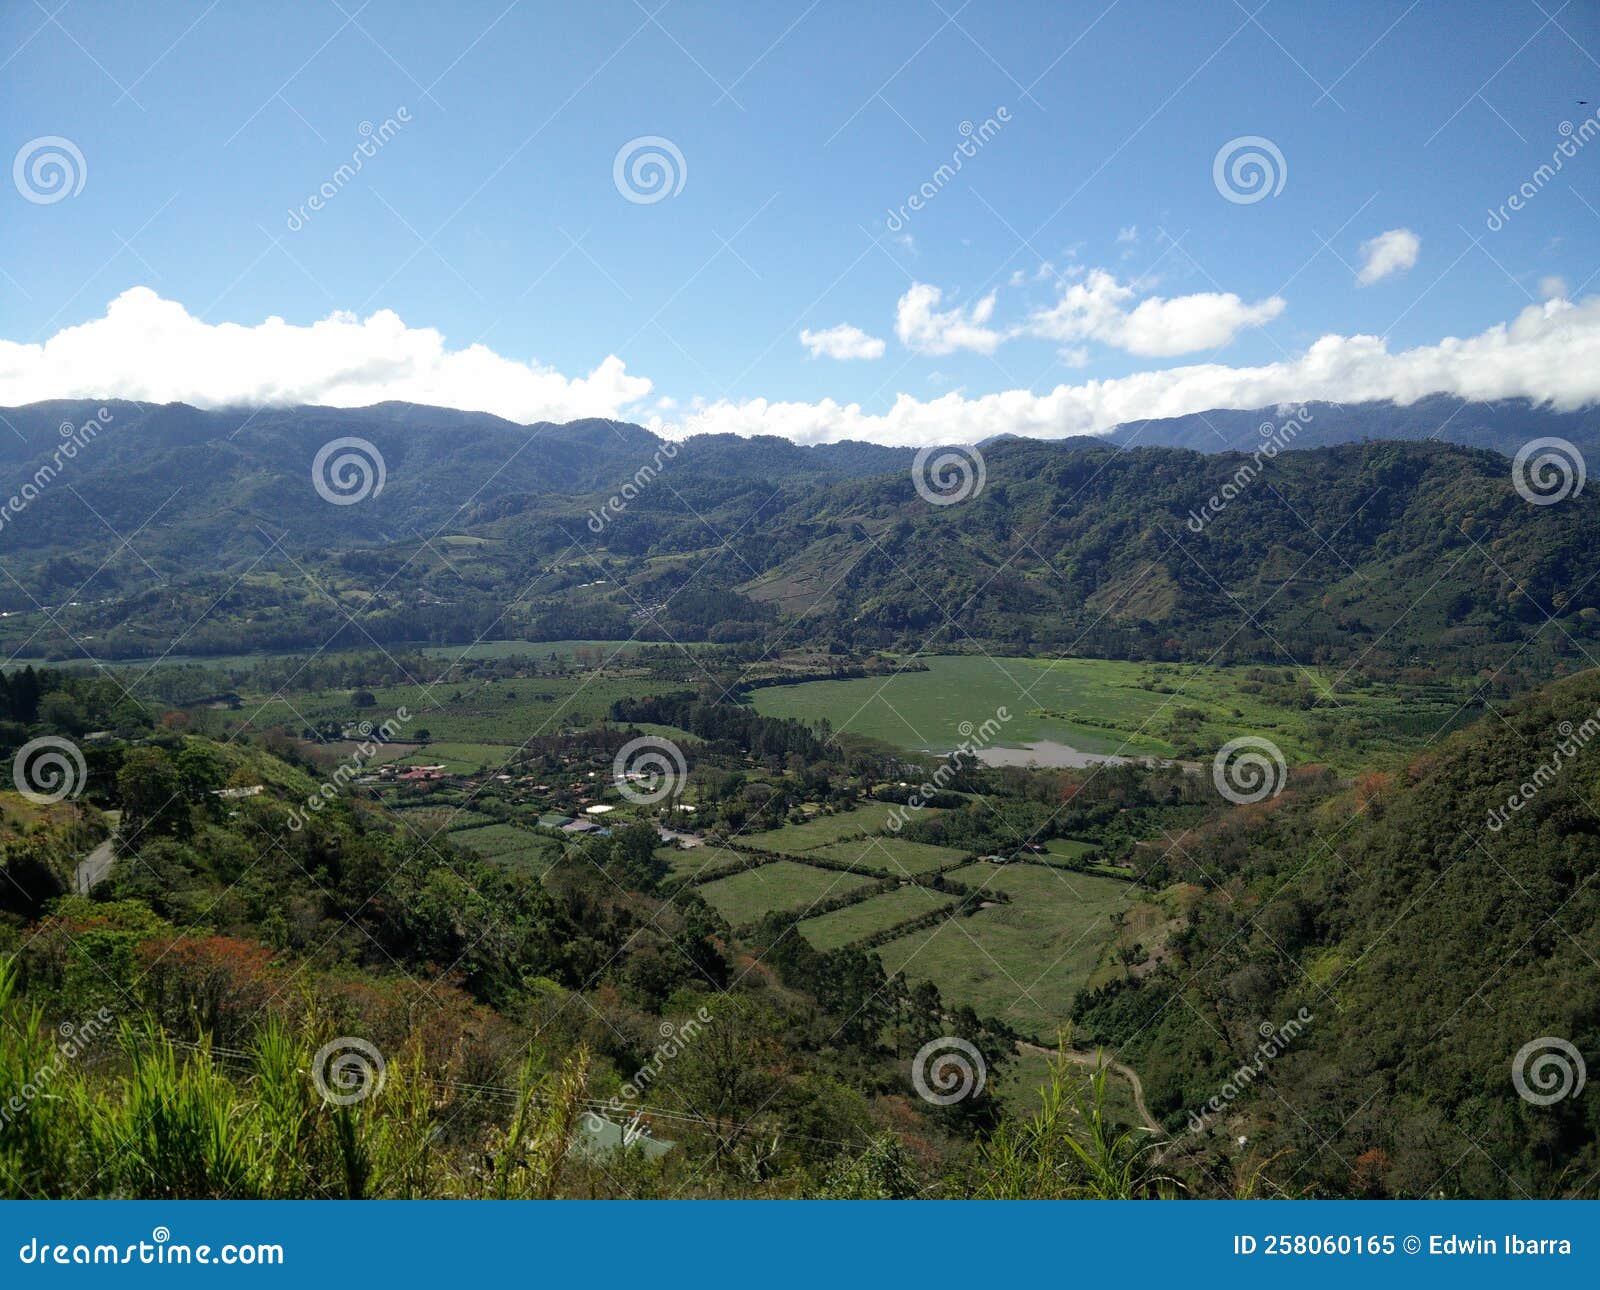 a beautiful landscape of the orosi valley in cartago, costa rica